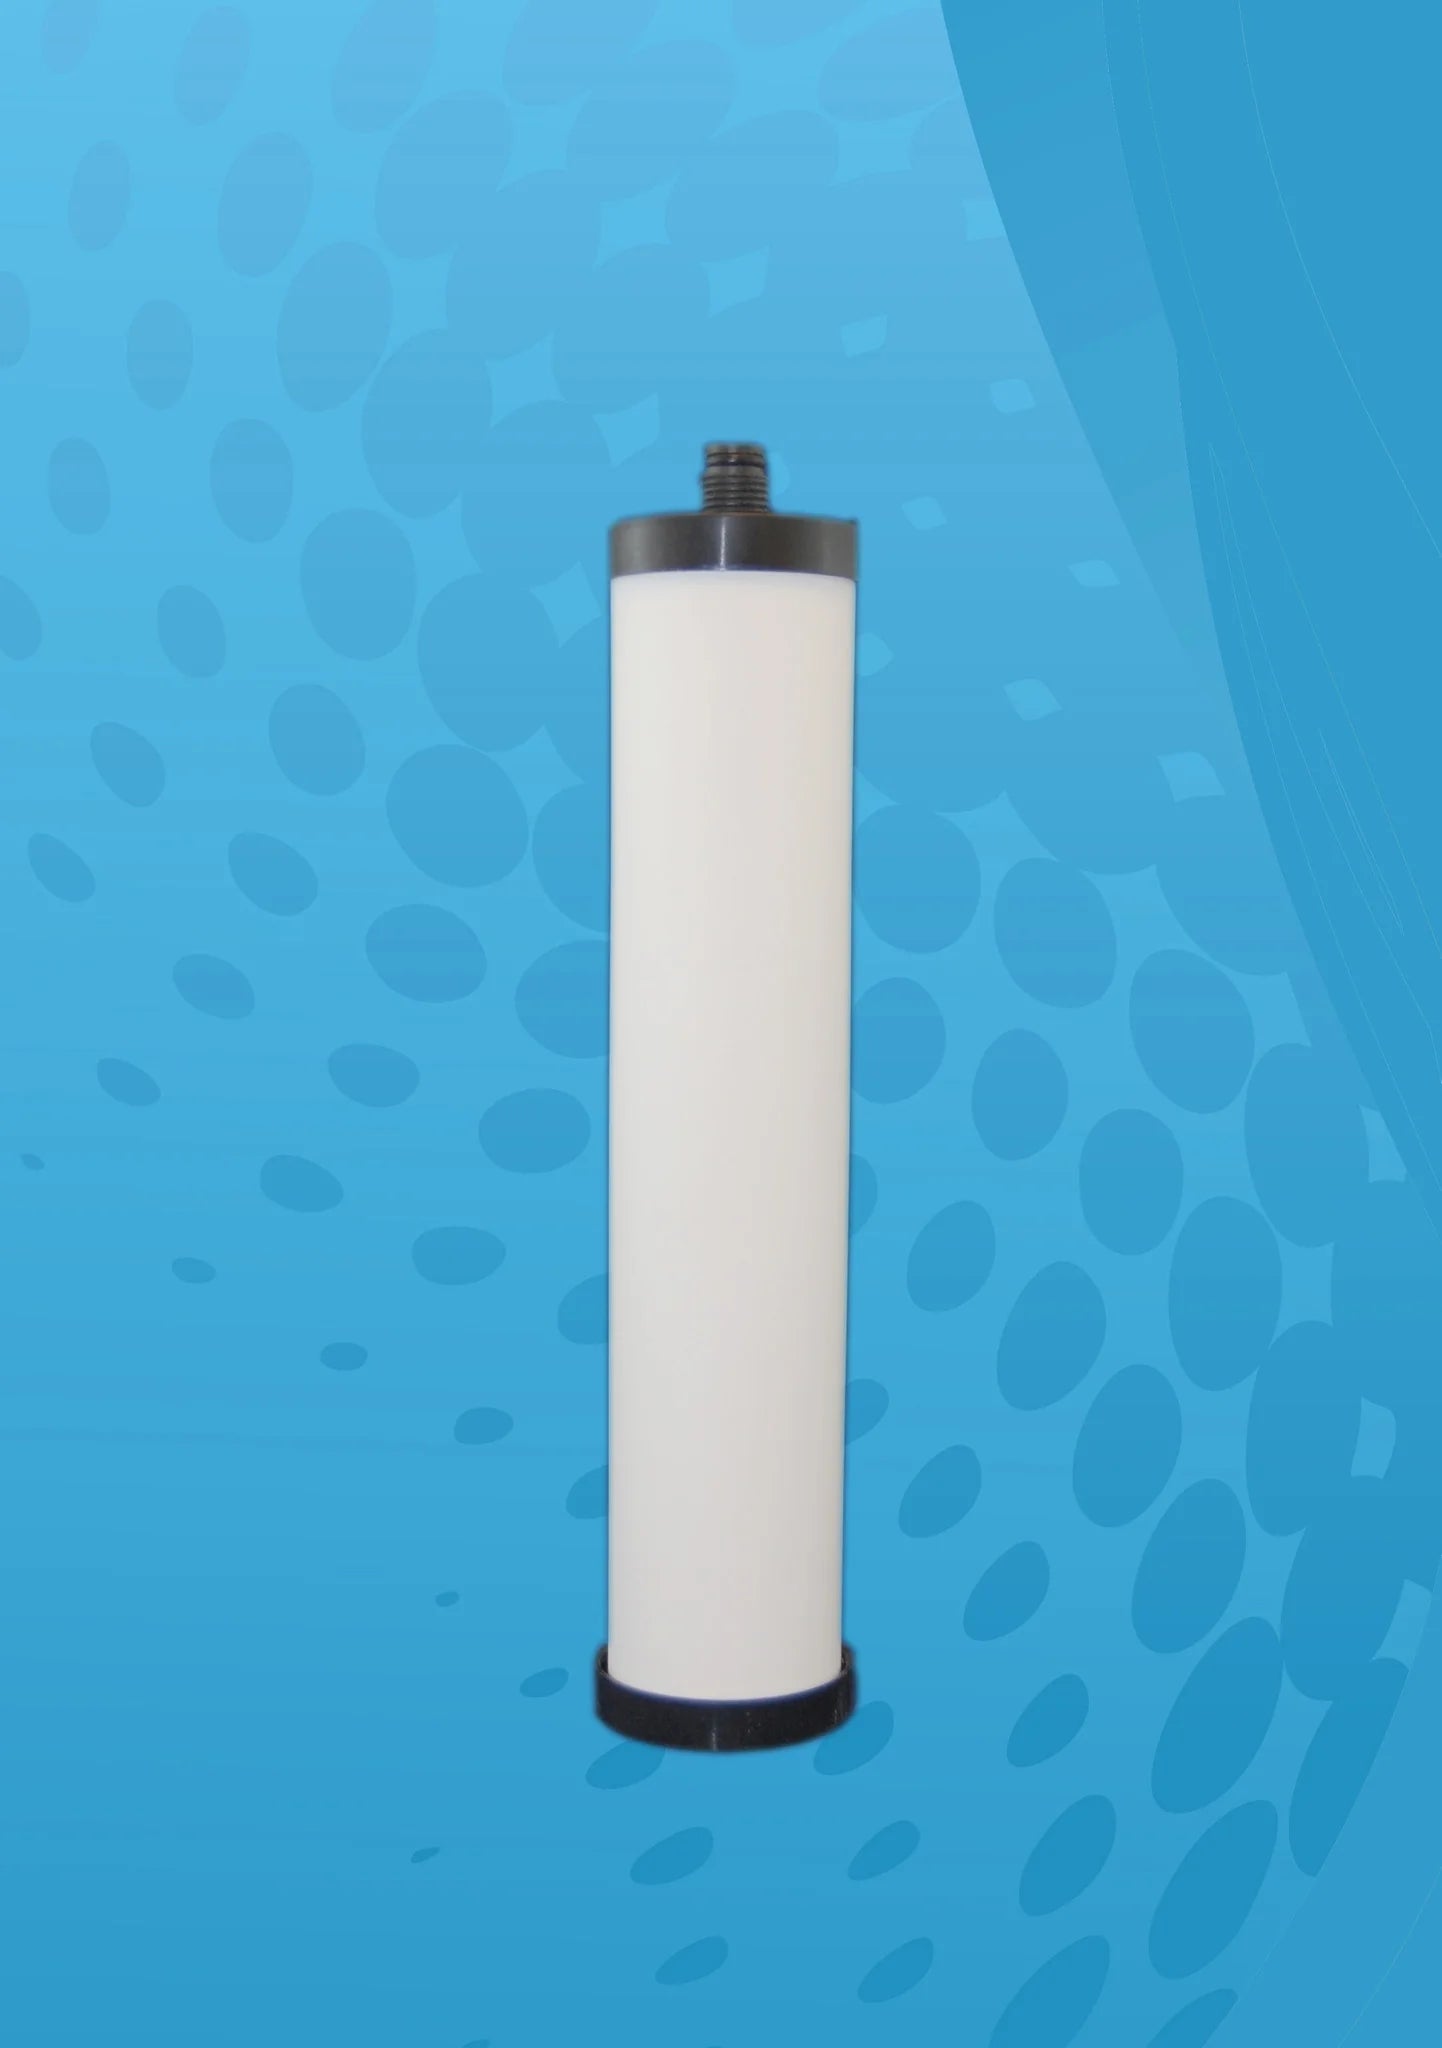 CeraUltra Slimline Replacement Filter - Chlorine, Lead & Mercury Reduction